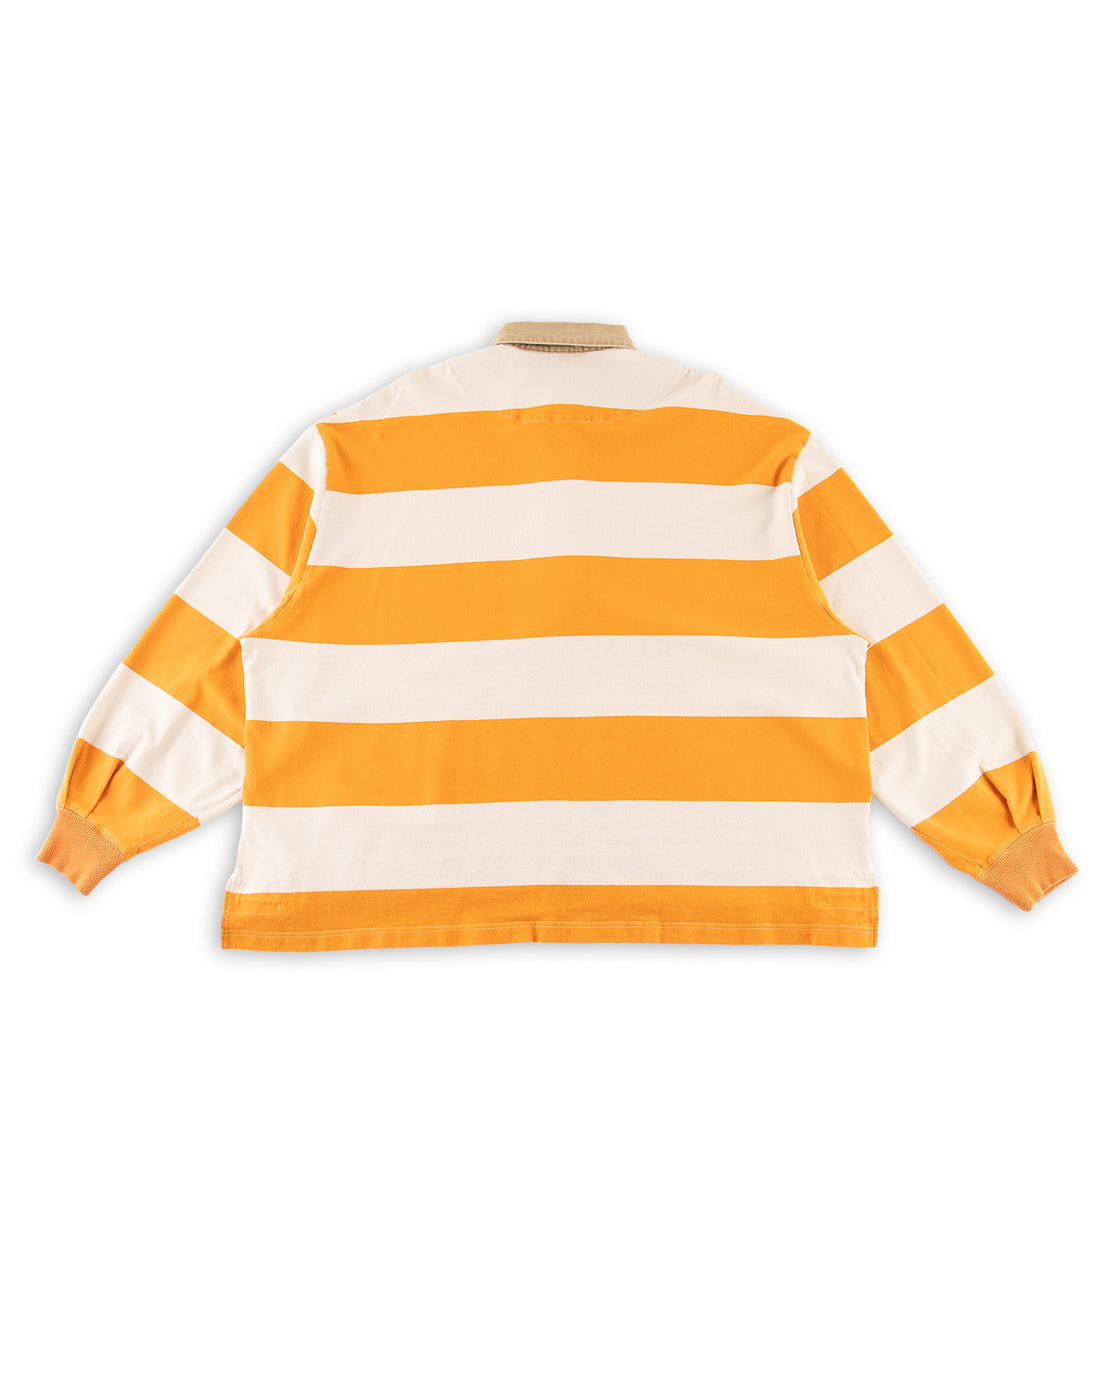 Kapital JAIL Stripe Jersey BIG Rugger Shirt - Ecru x Orange 3 - Standard & Strange